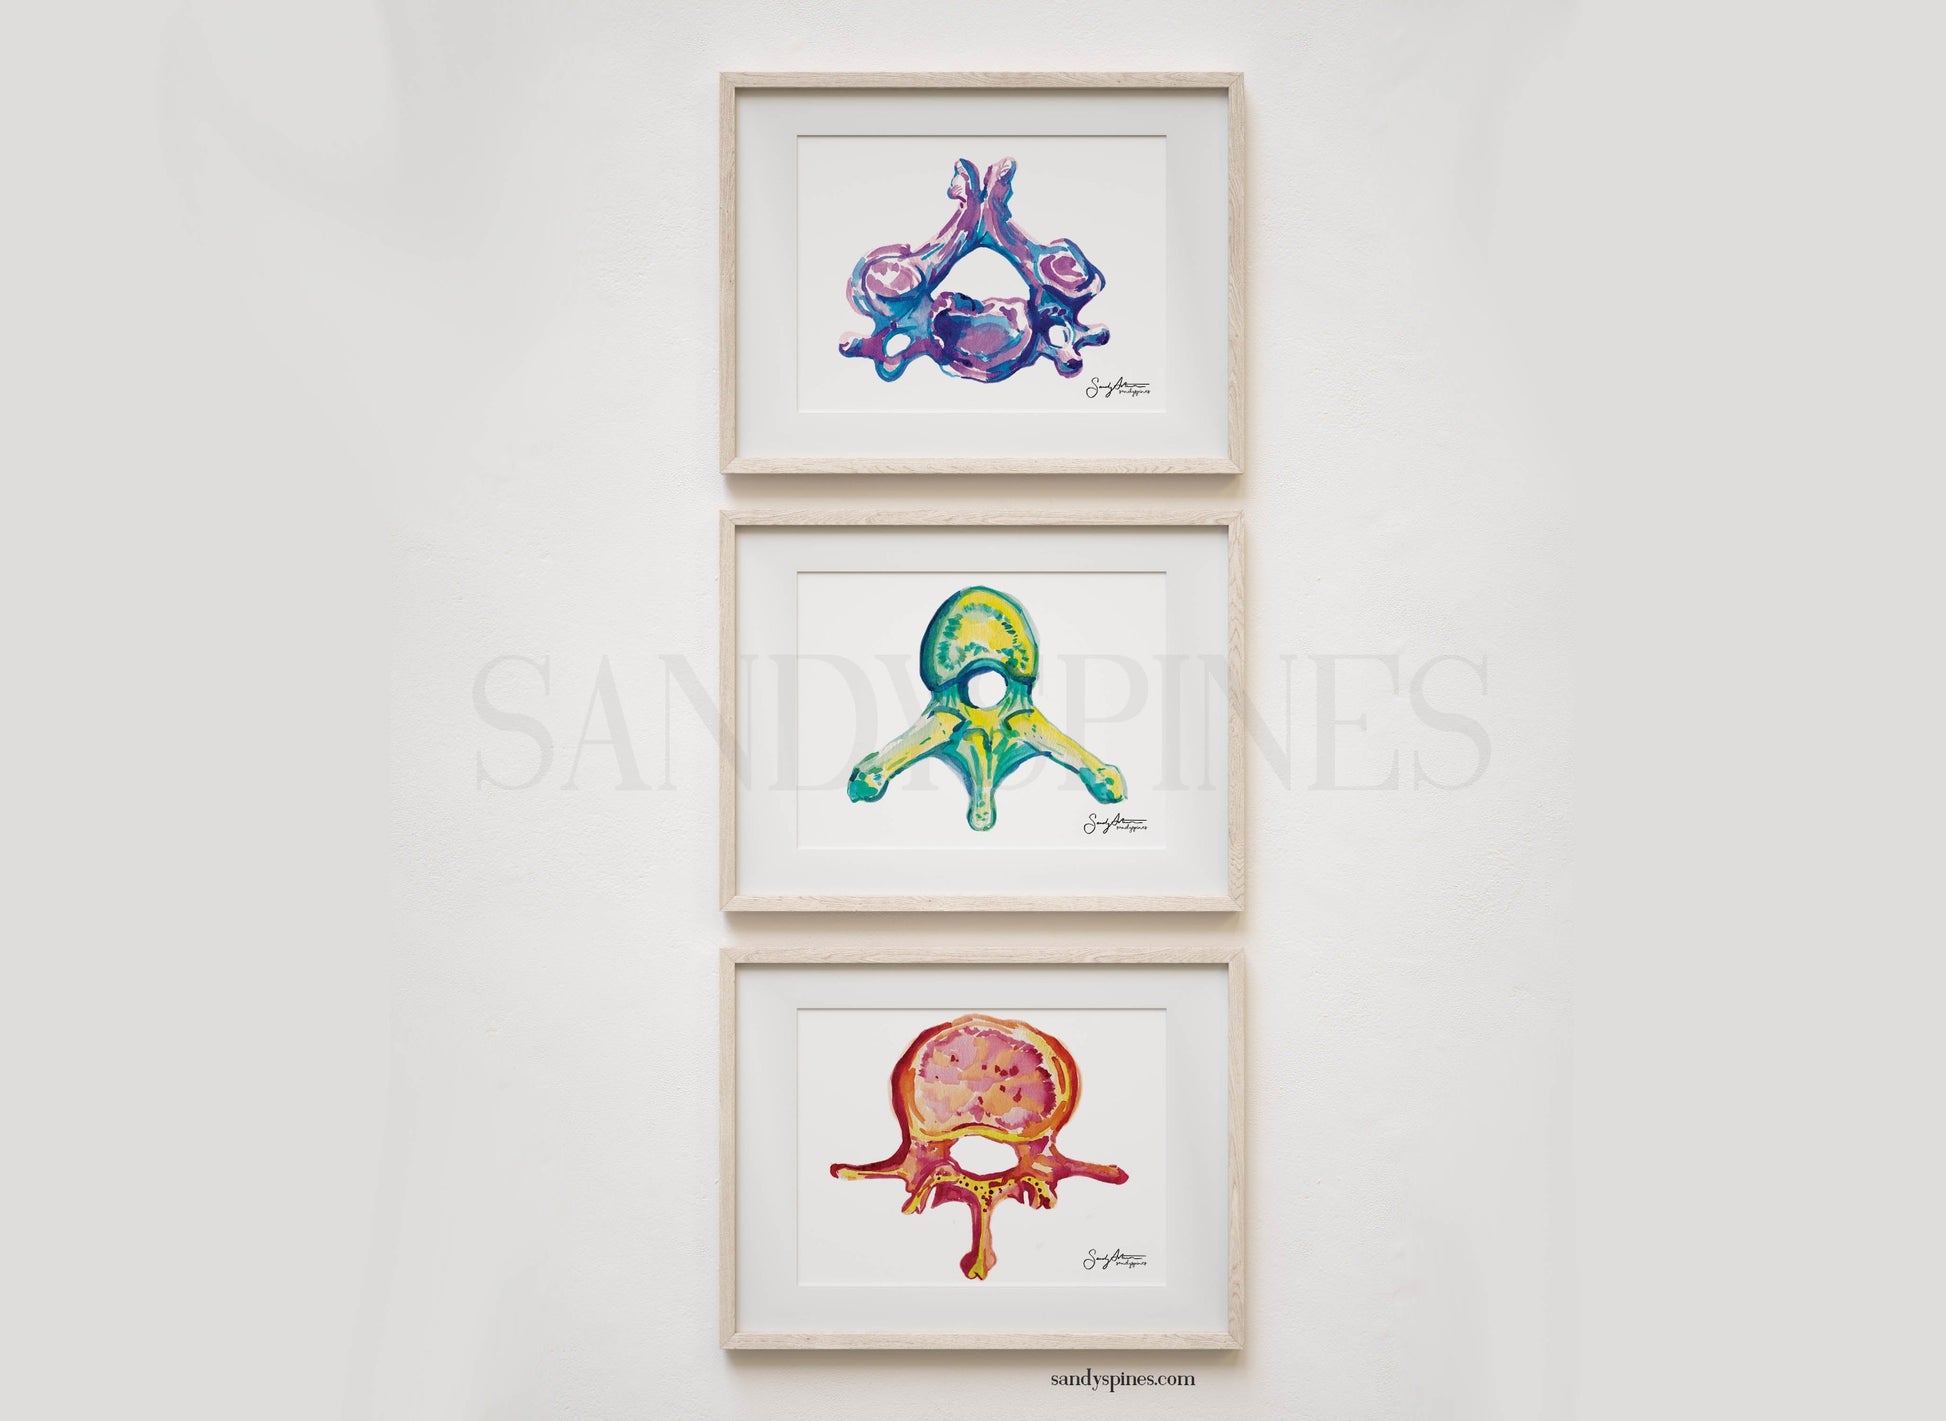 Cervical, thoracic, lumbar vertebrae anatomy art by SandySpines, chiropractor artist 